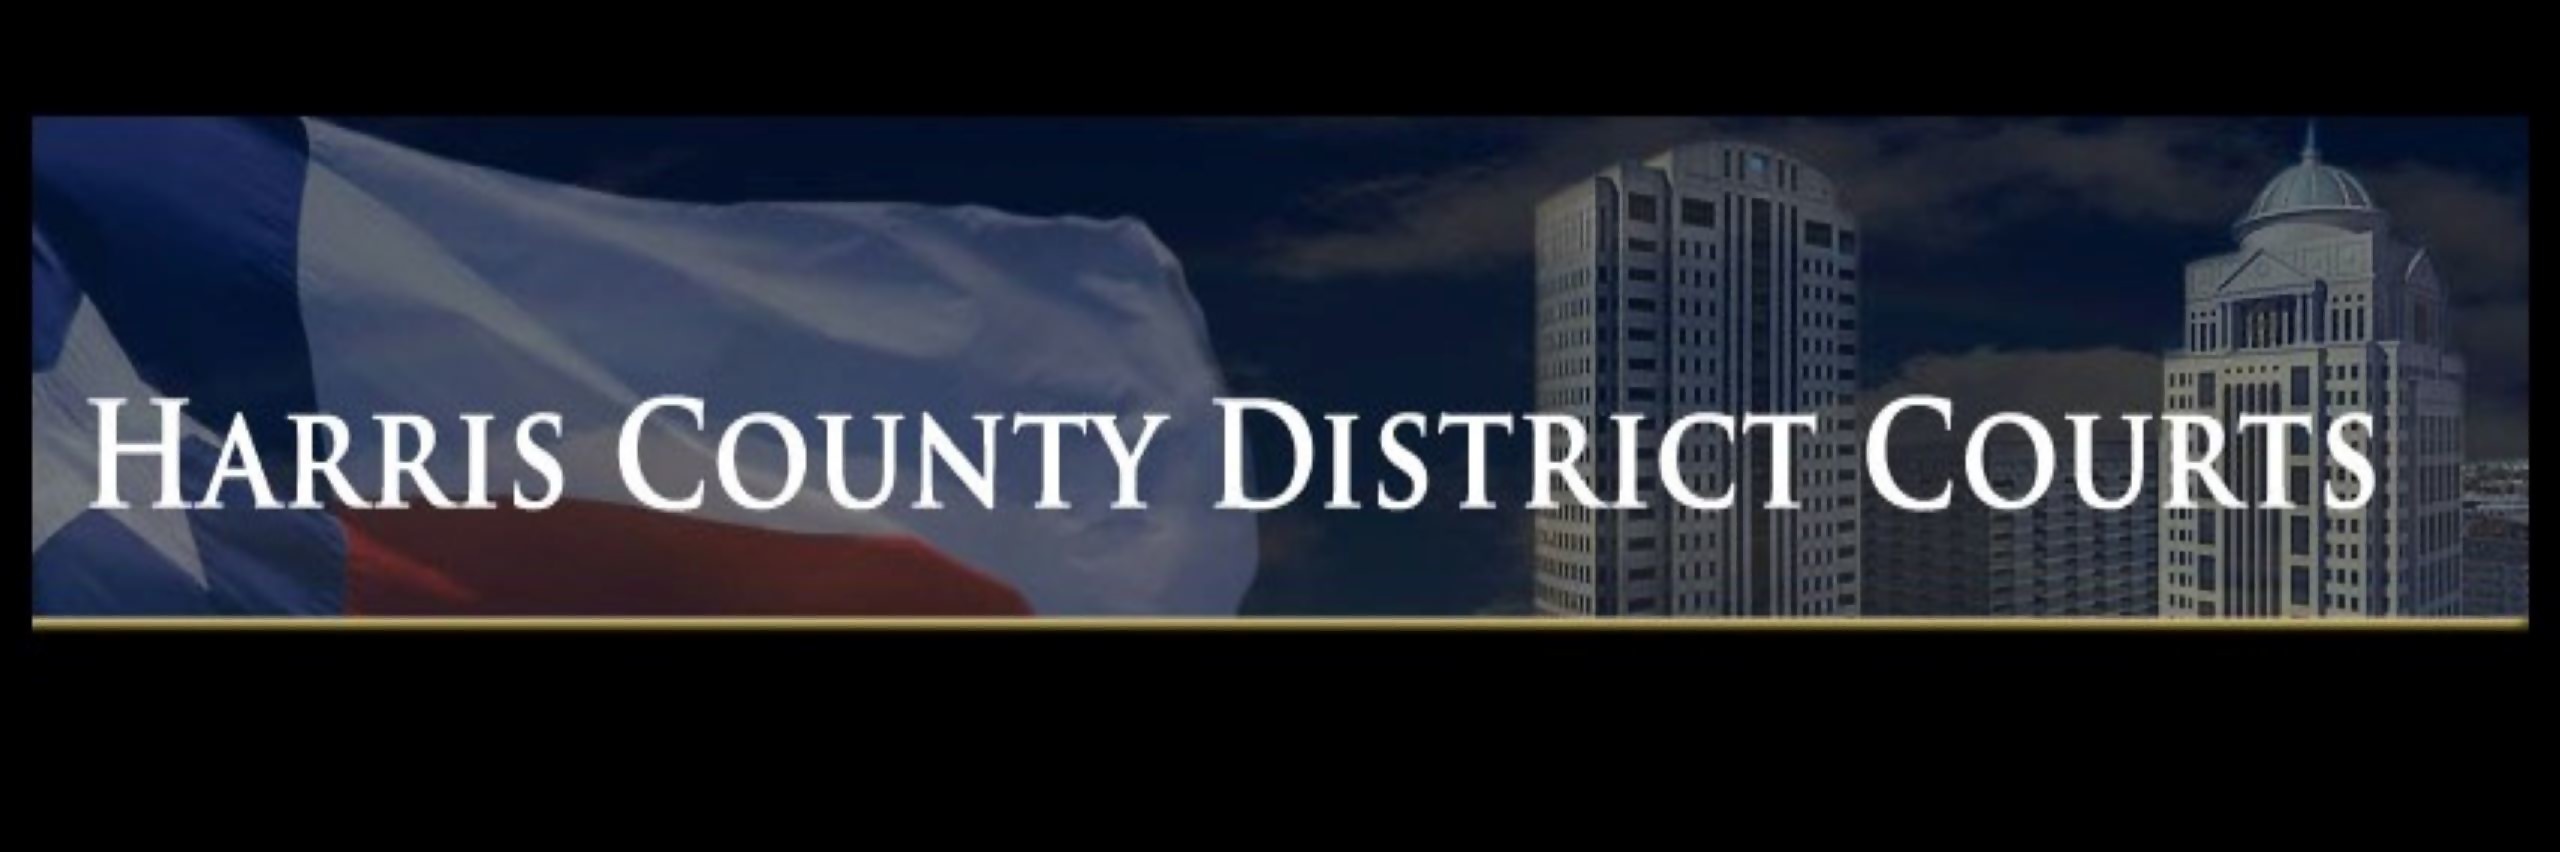 174th District Court - Live Stream